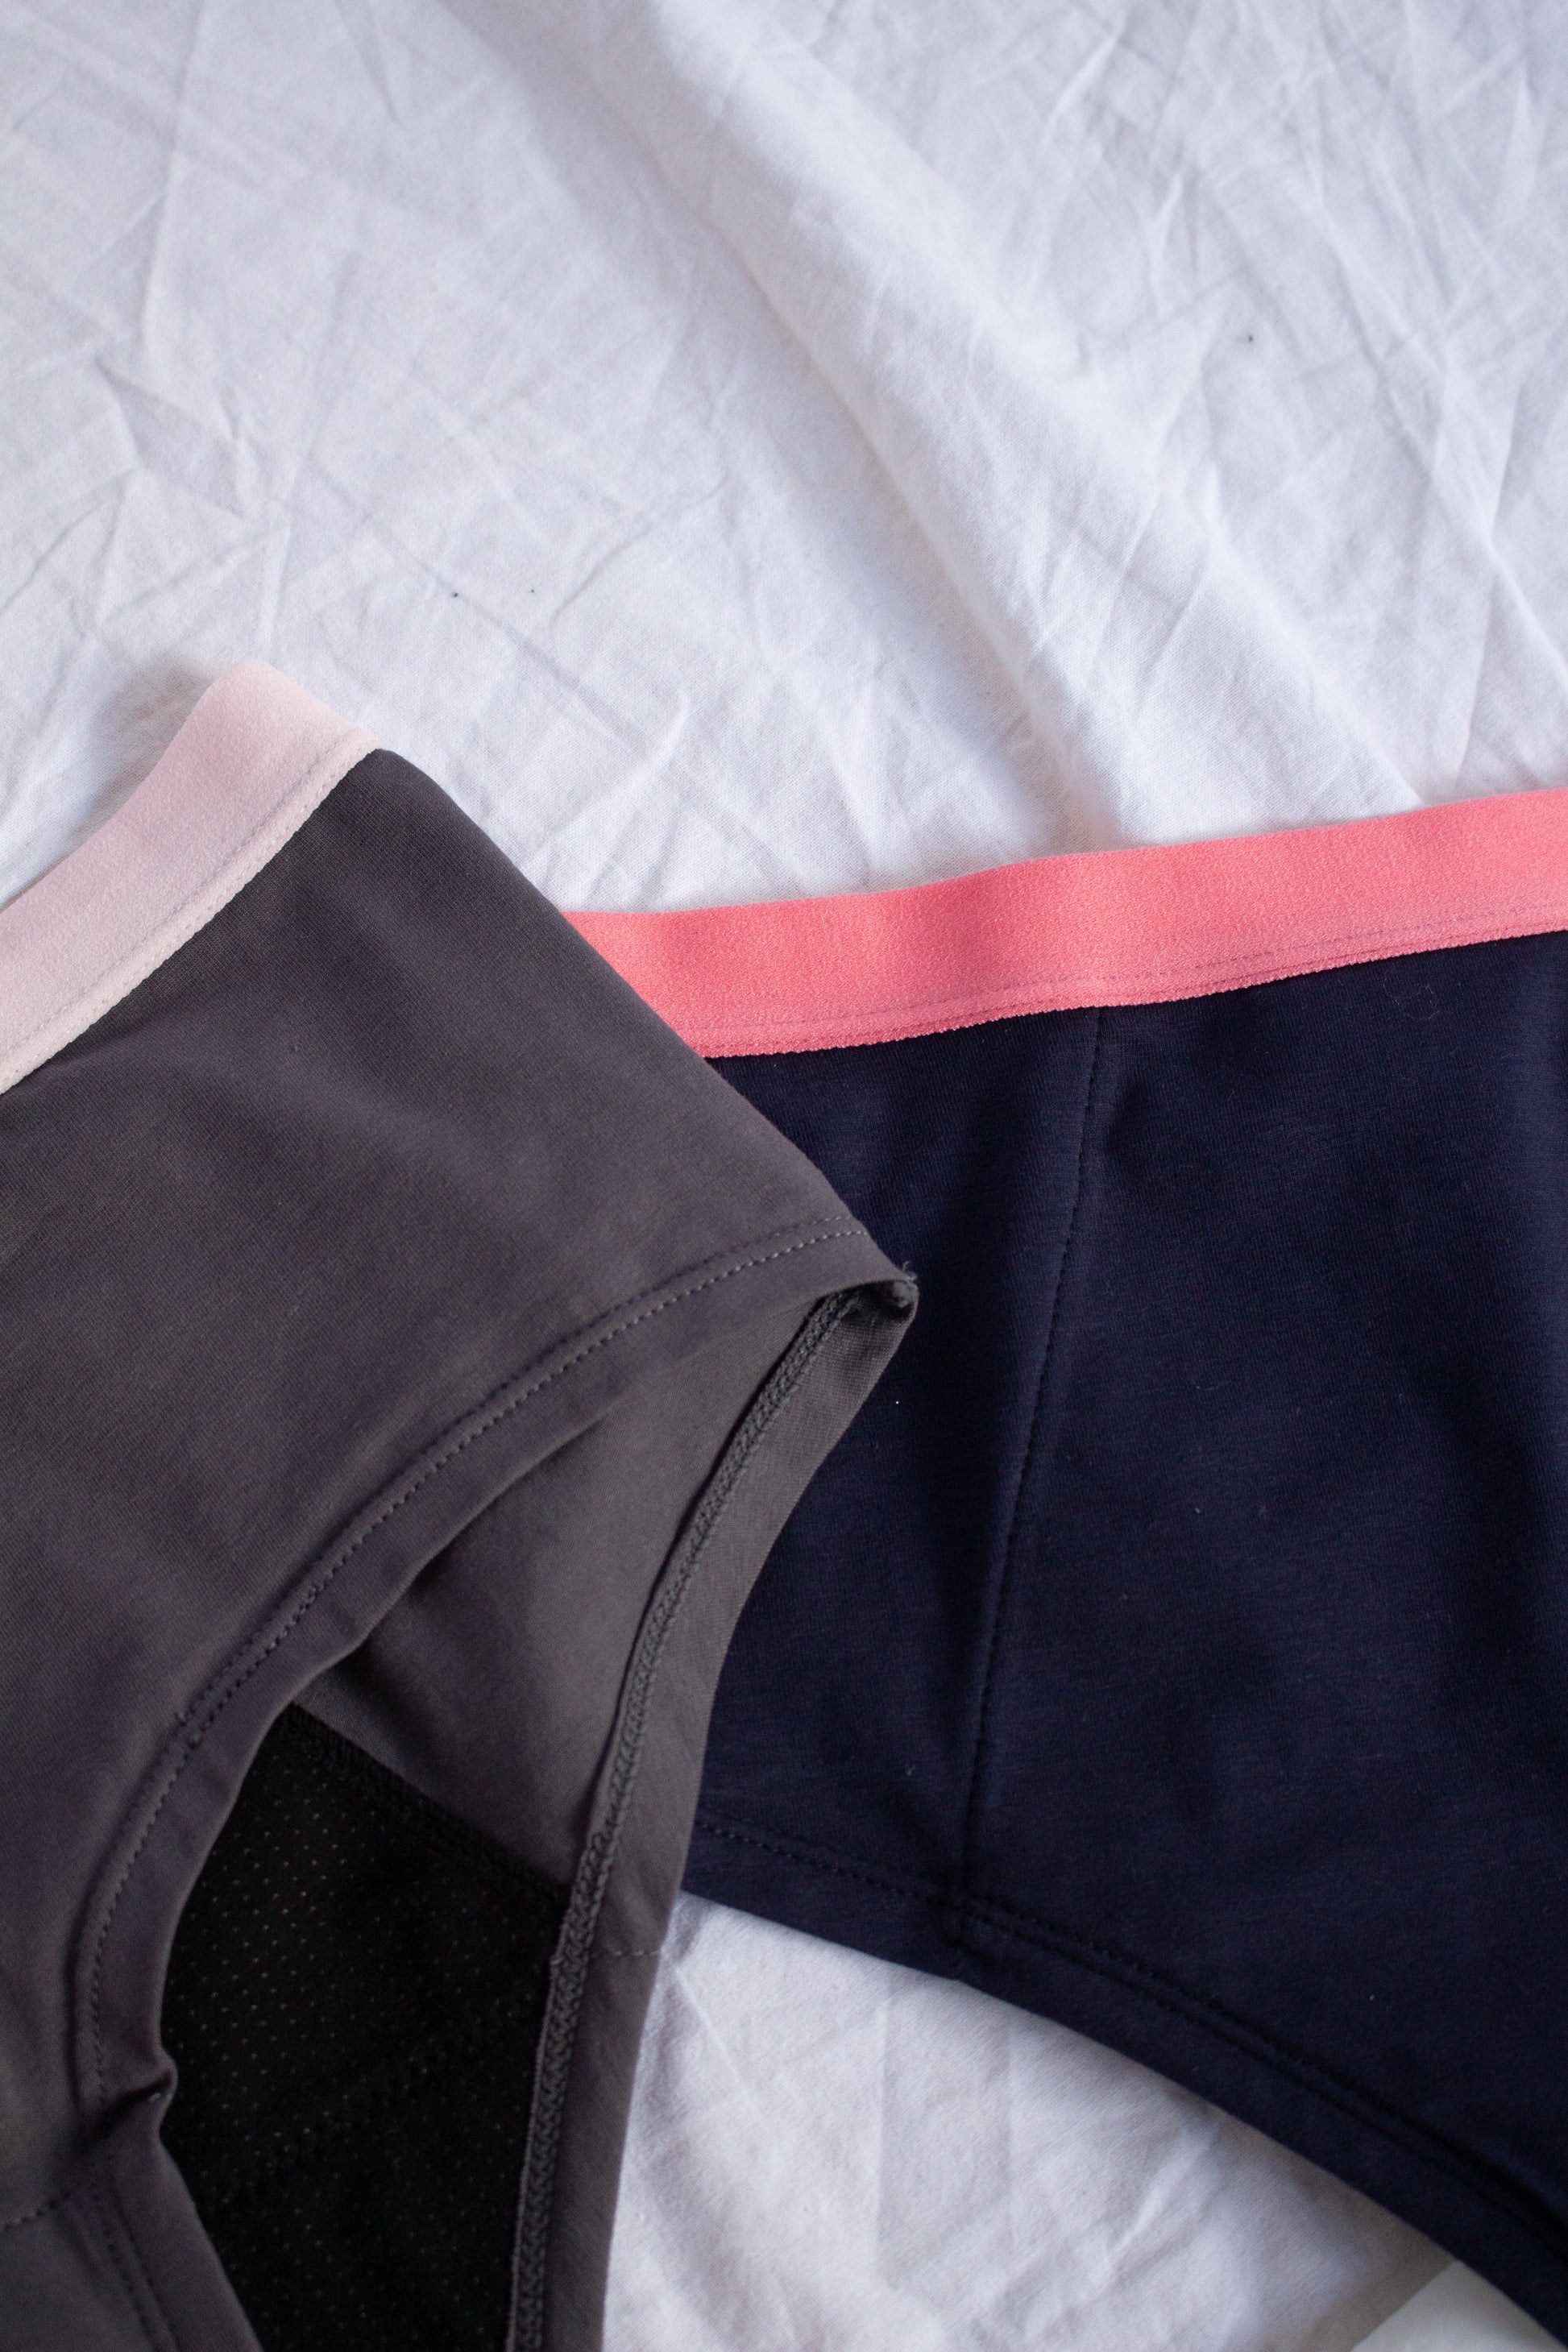 Buy Period Panties For Tweens Online  Young Teenager First Period Underwear  – Blushproof